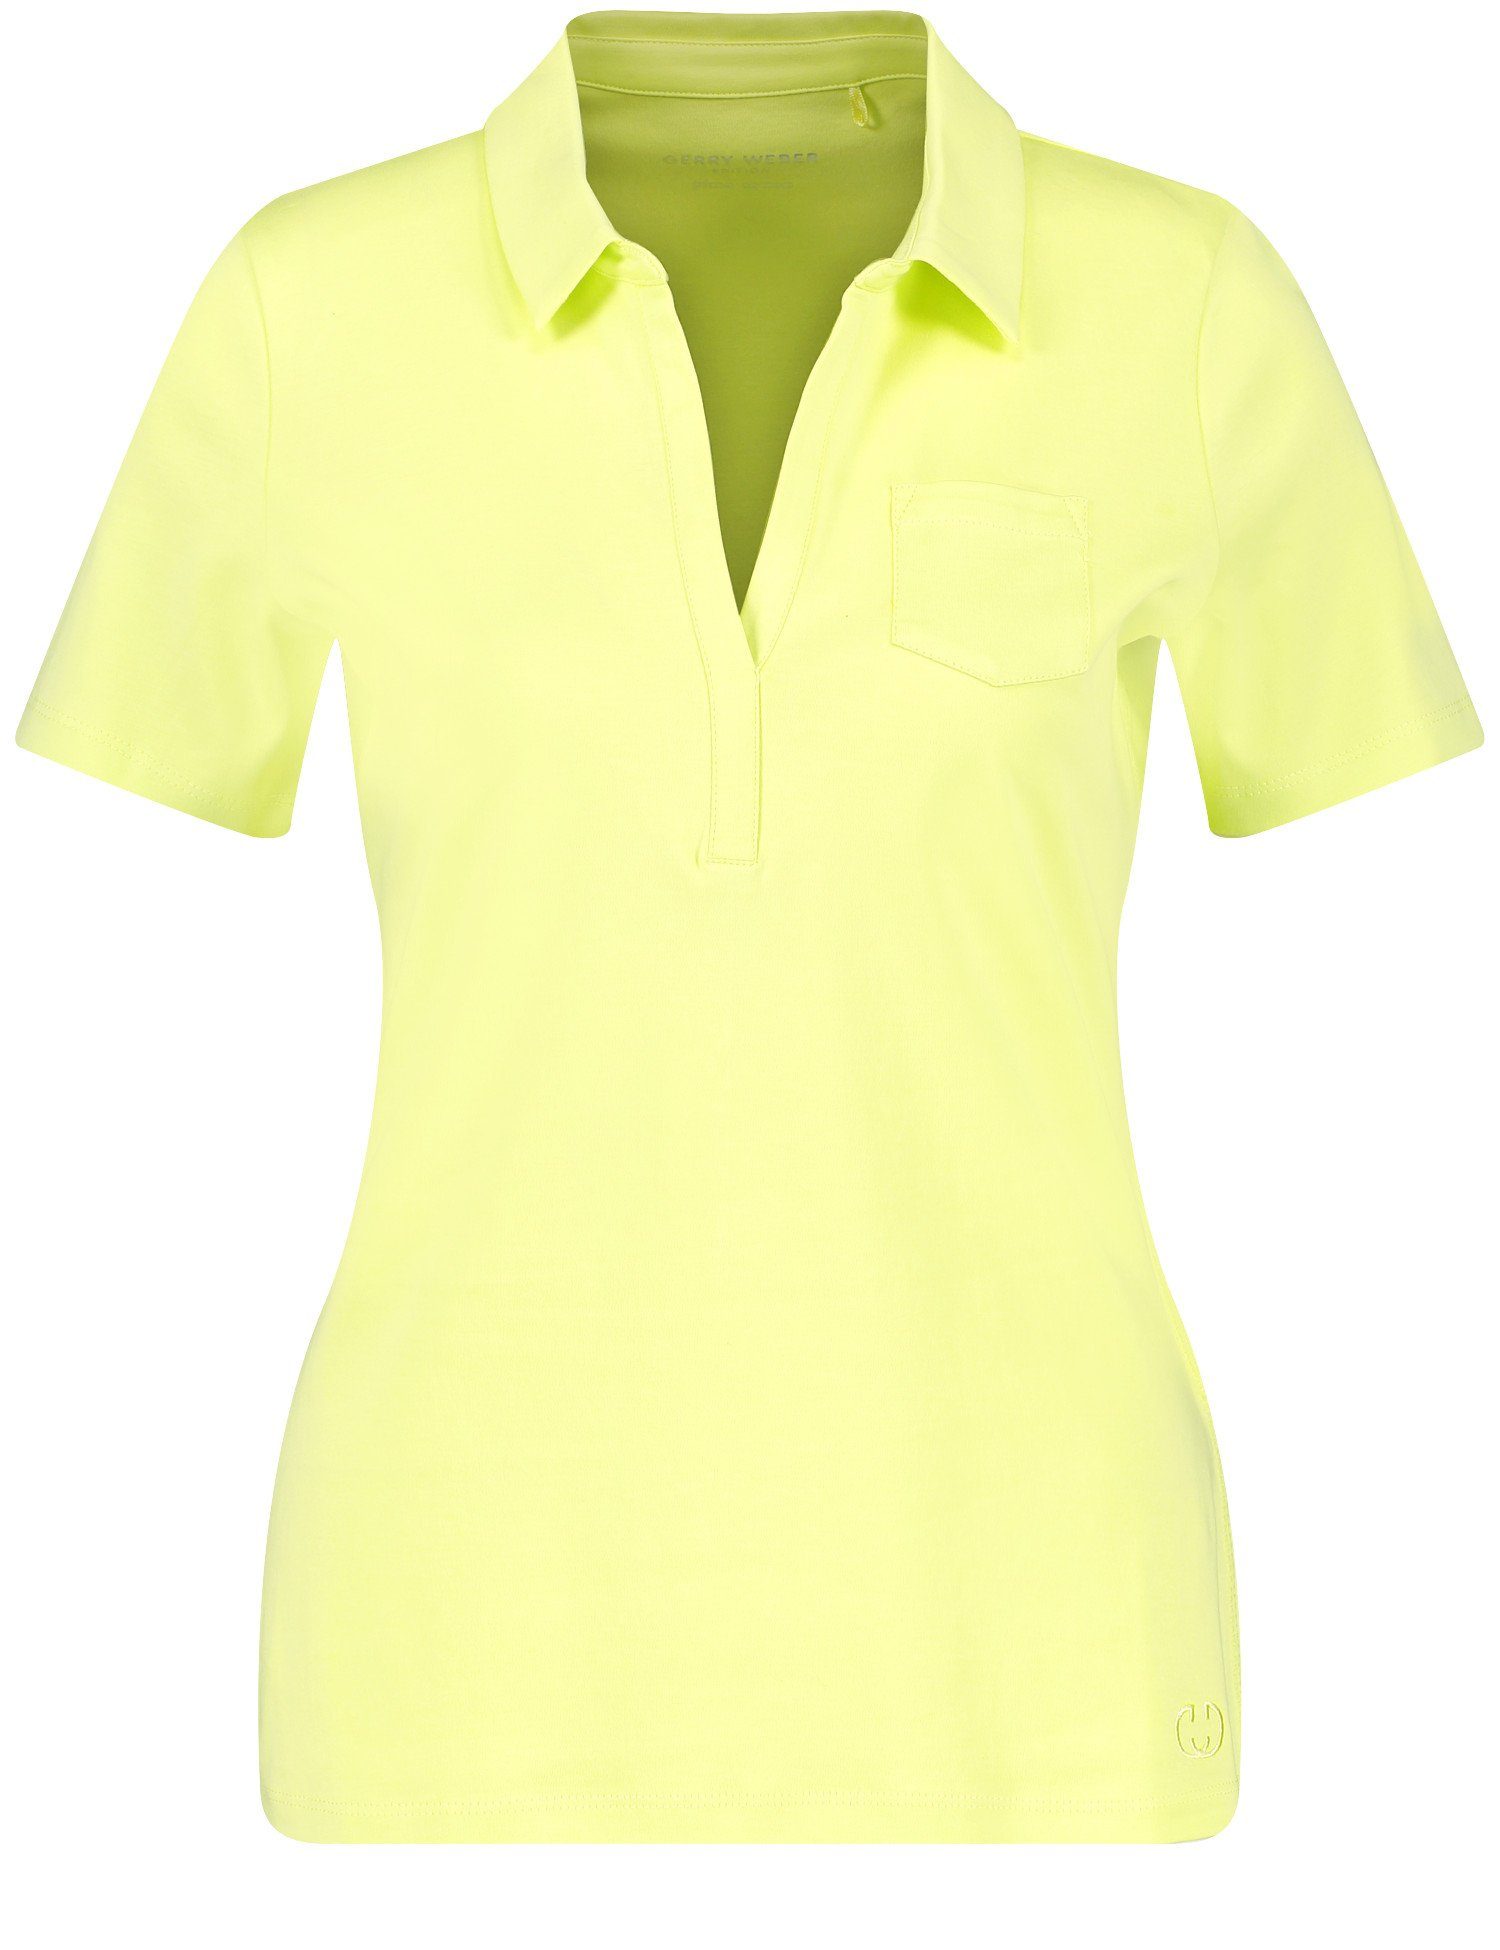 Lime GERRY Poloshirt Kurzarm Poloshirt WEBER Light